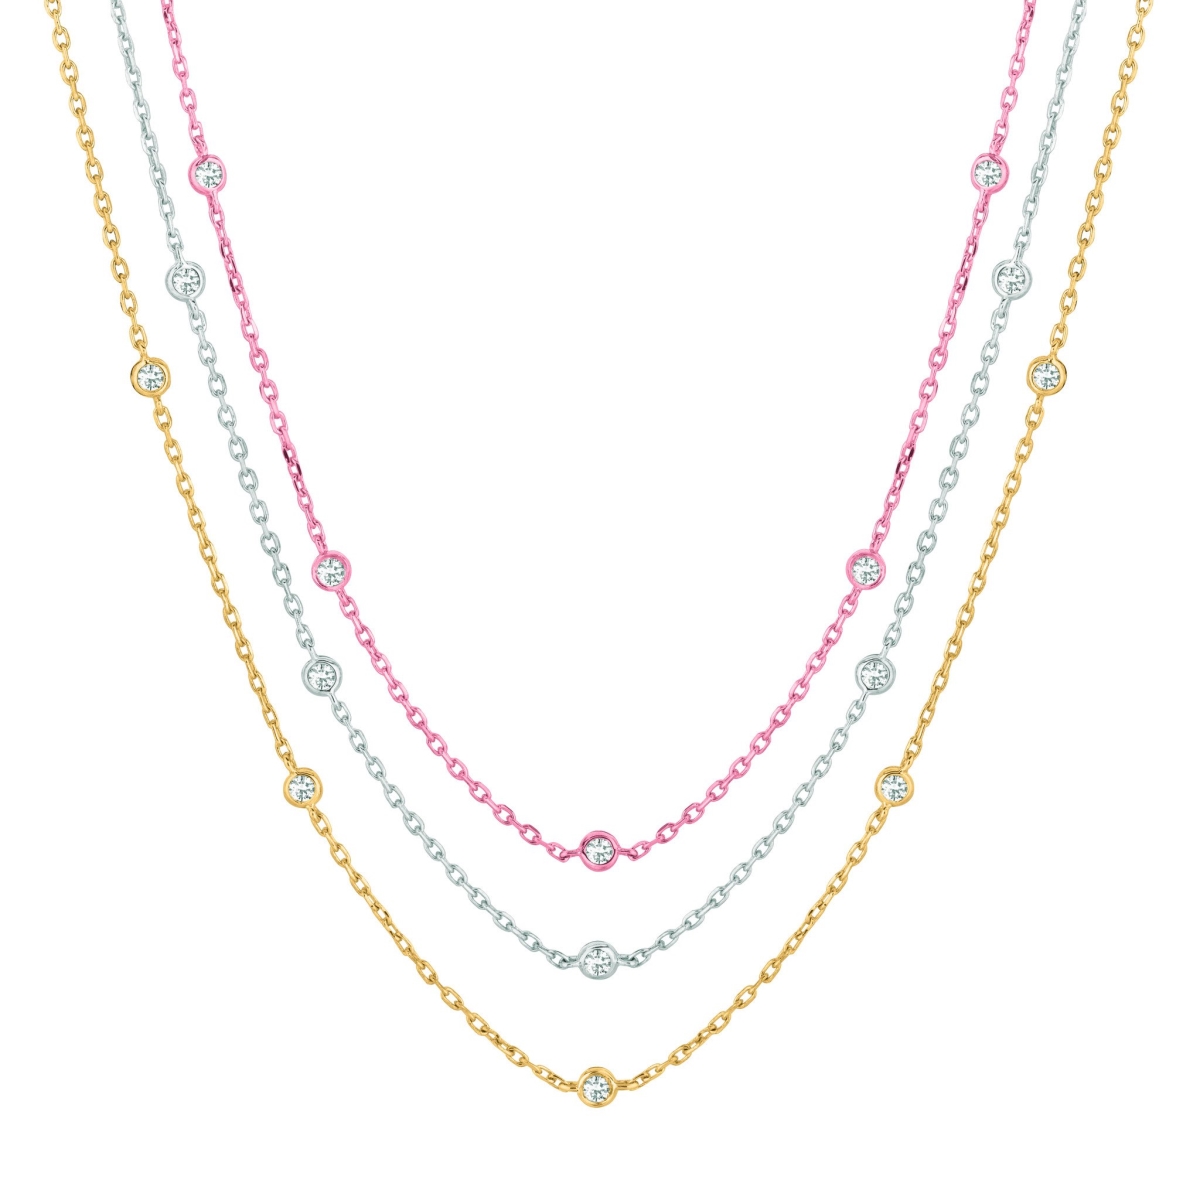 Hc11382 4.5 Ct 10 Pointer 3 Strand Diamond Necklace - 14k Pink, White & Yellow Gold